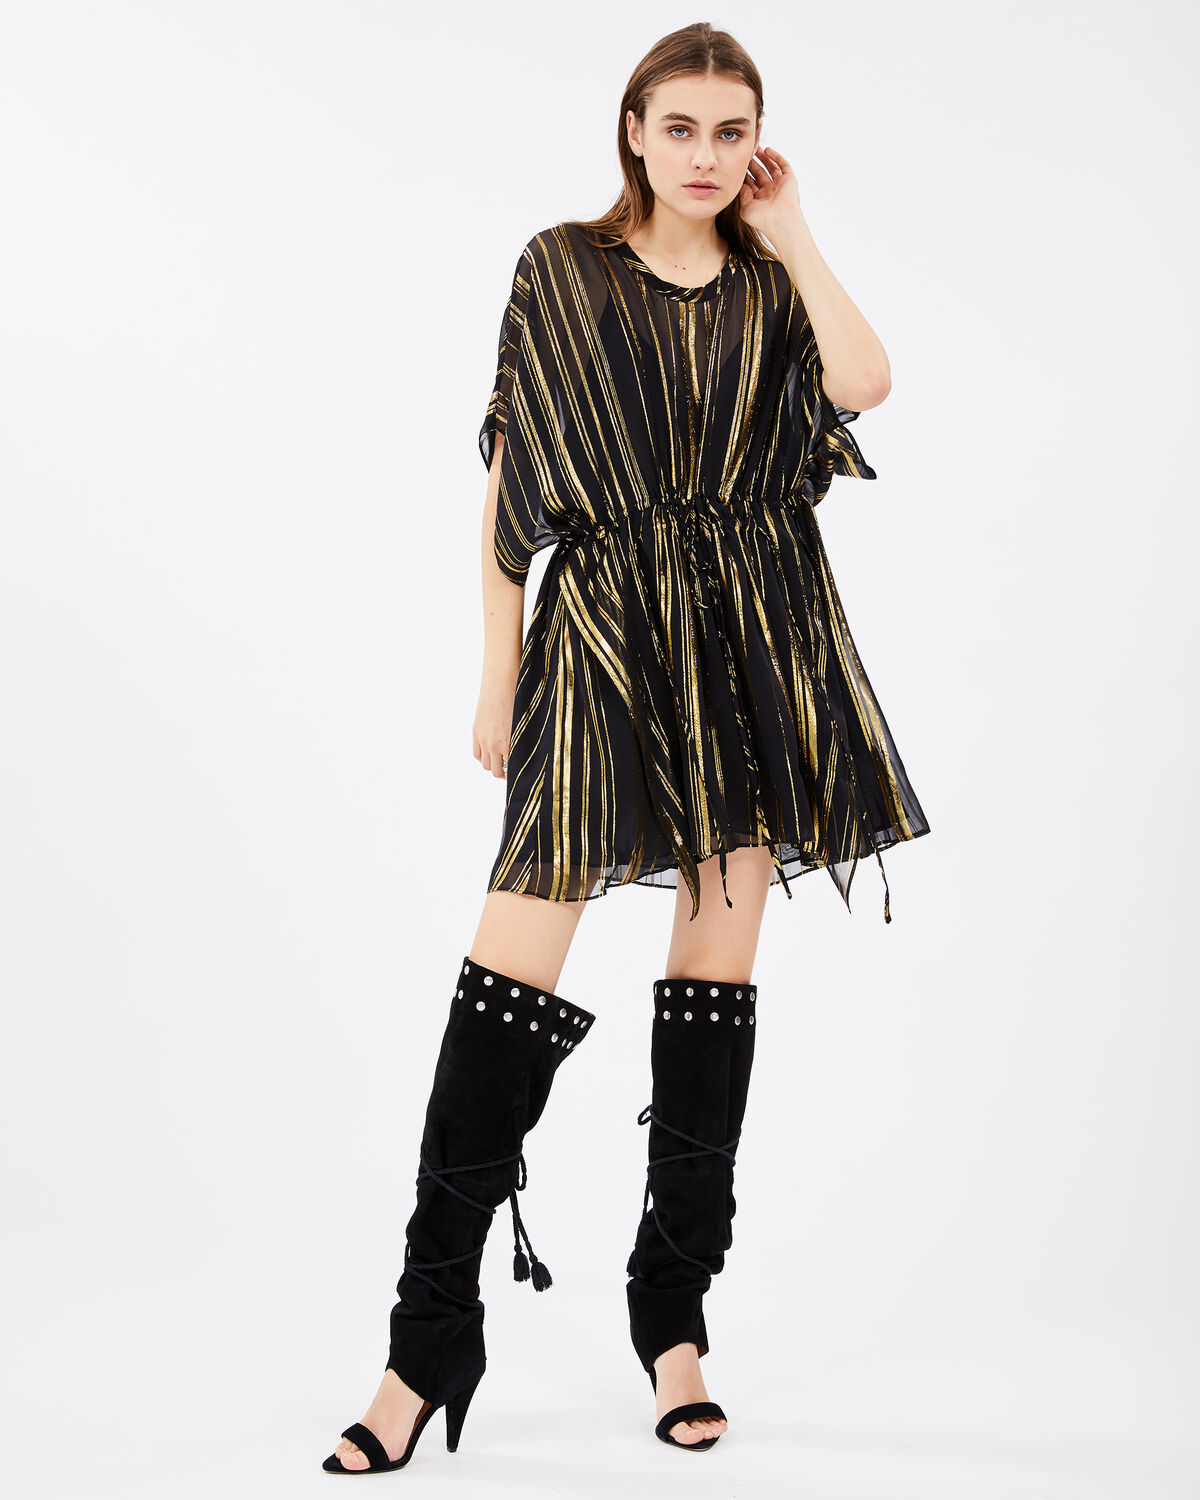 Enhance Dress Black And Gold by IRO Paris